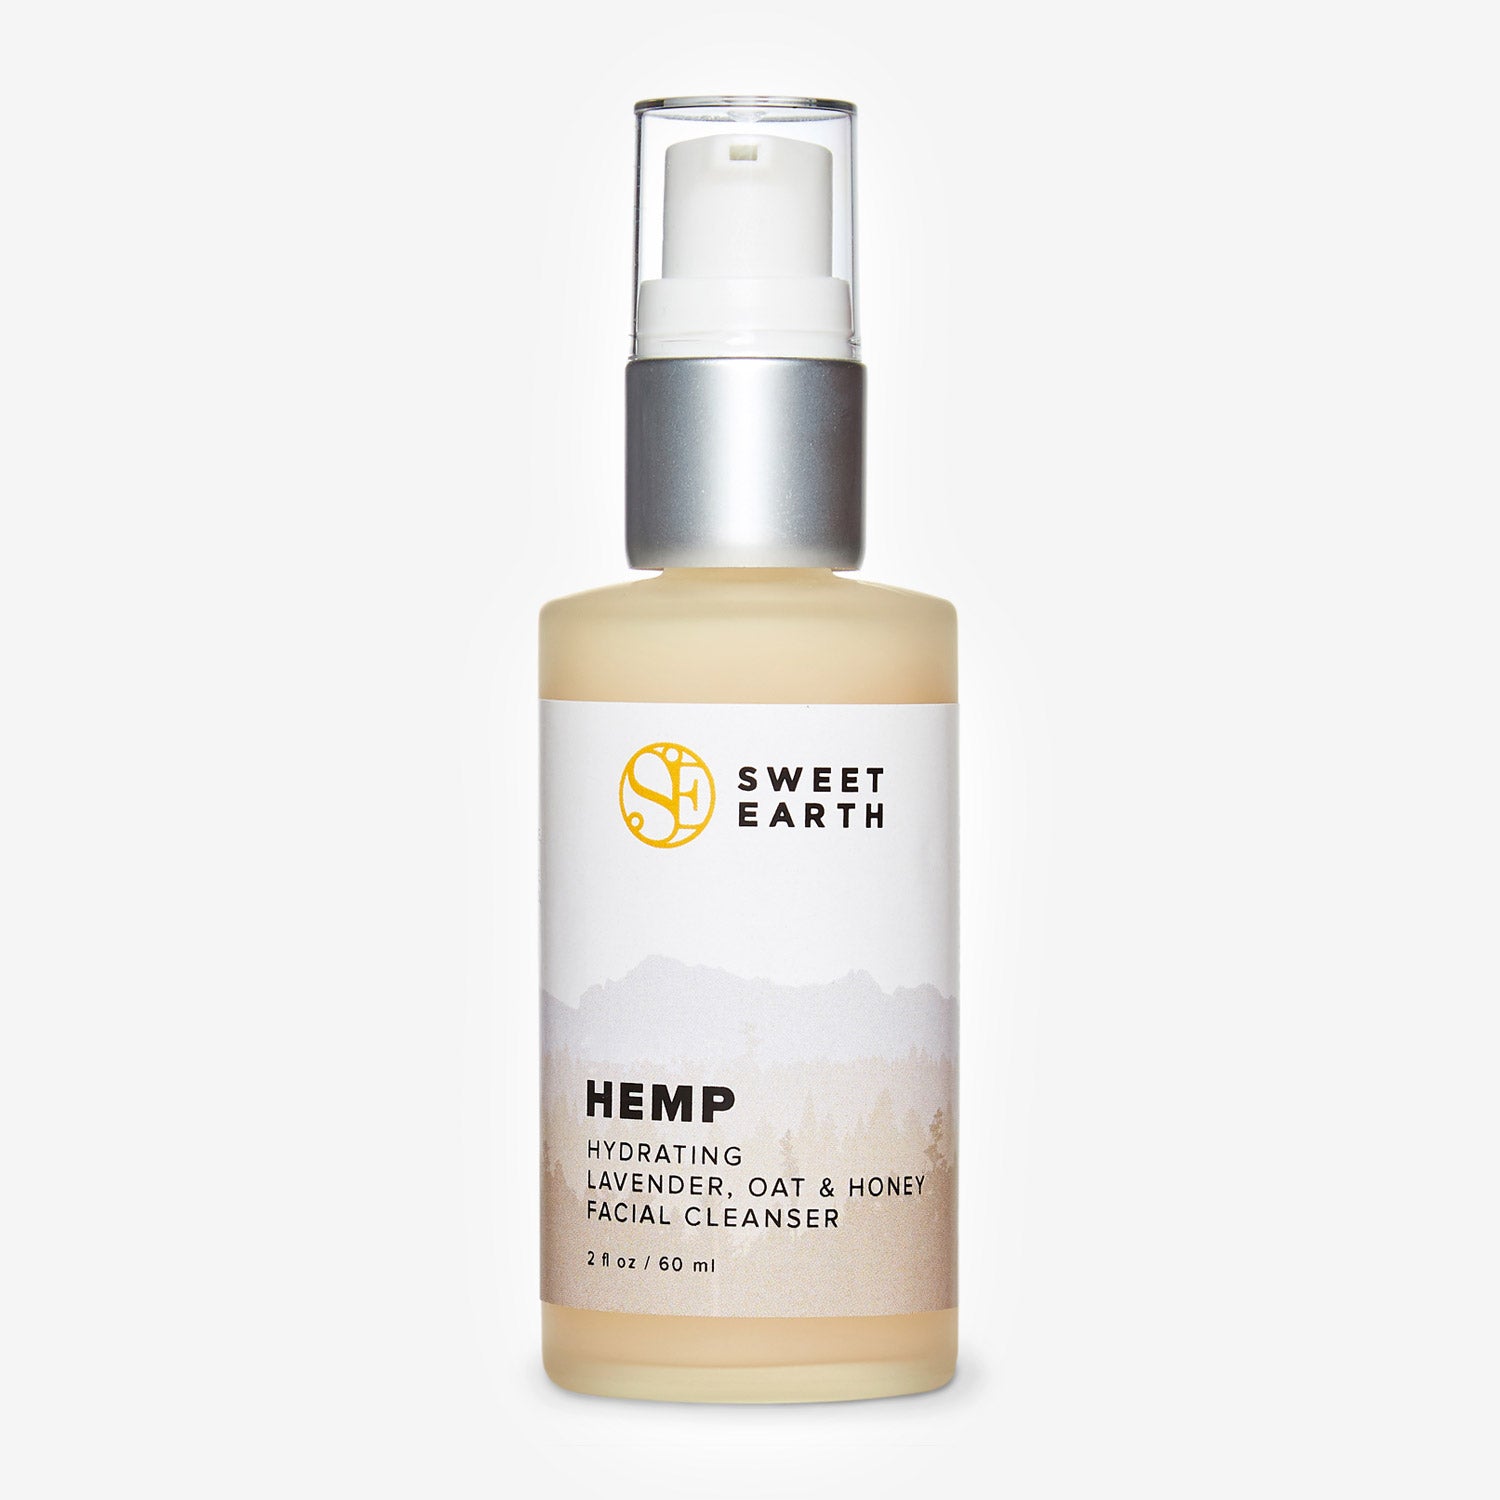 Hemp Hydrating Lavender, Oat & Honey Facial Cleanser